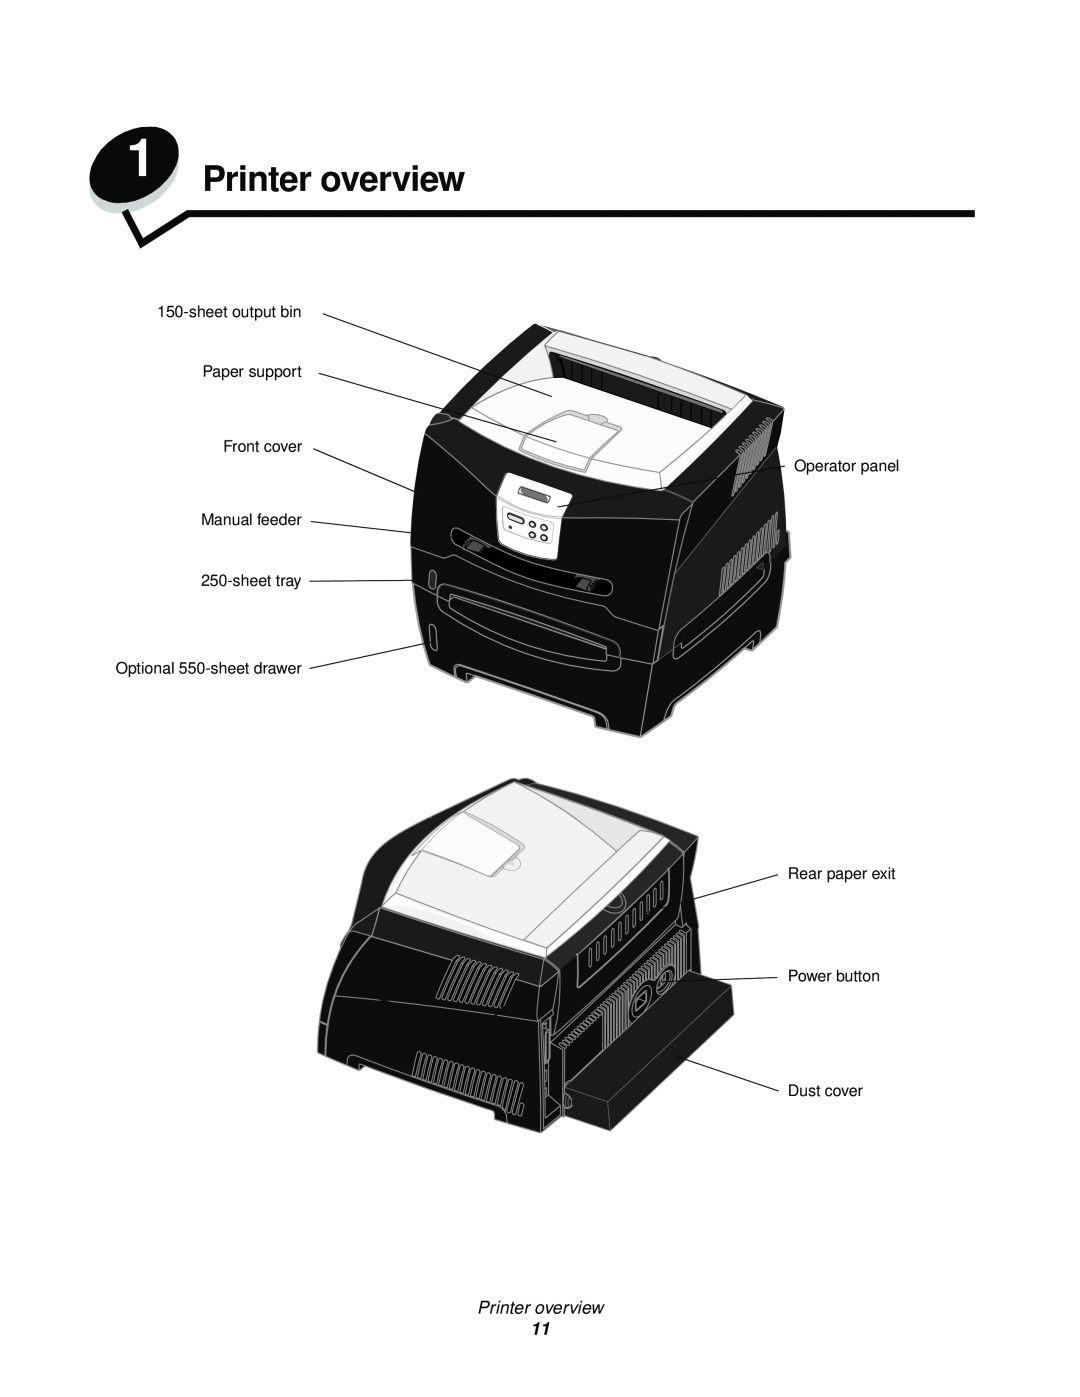 Lexmark 340, 342n manual Printer overview 